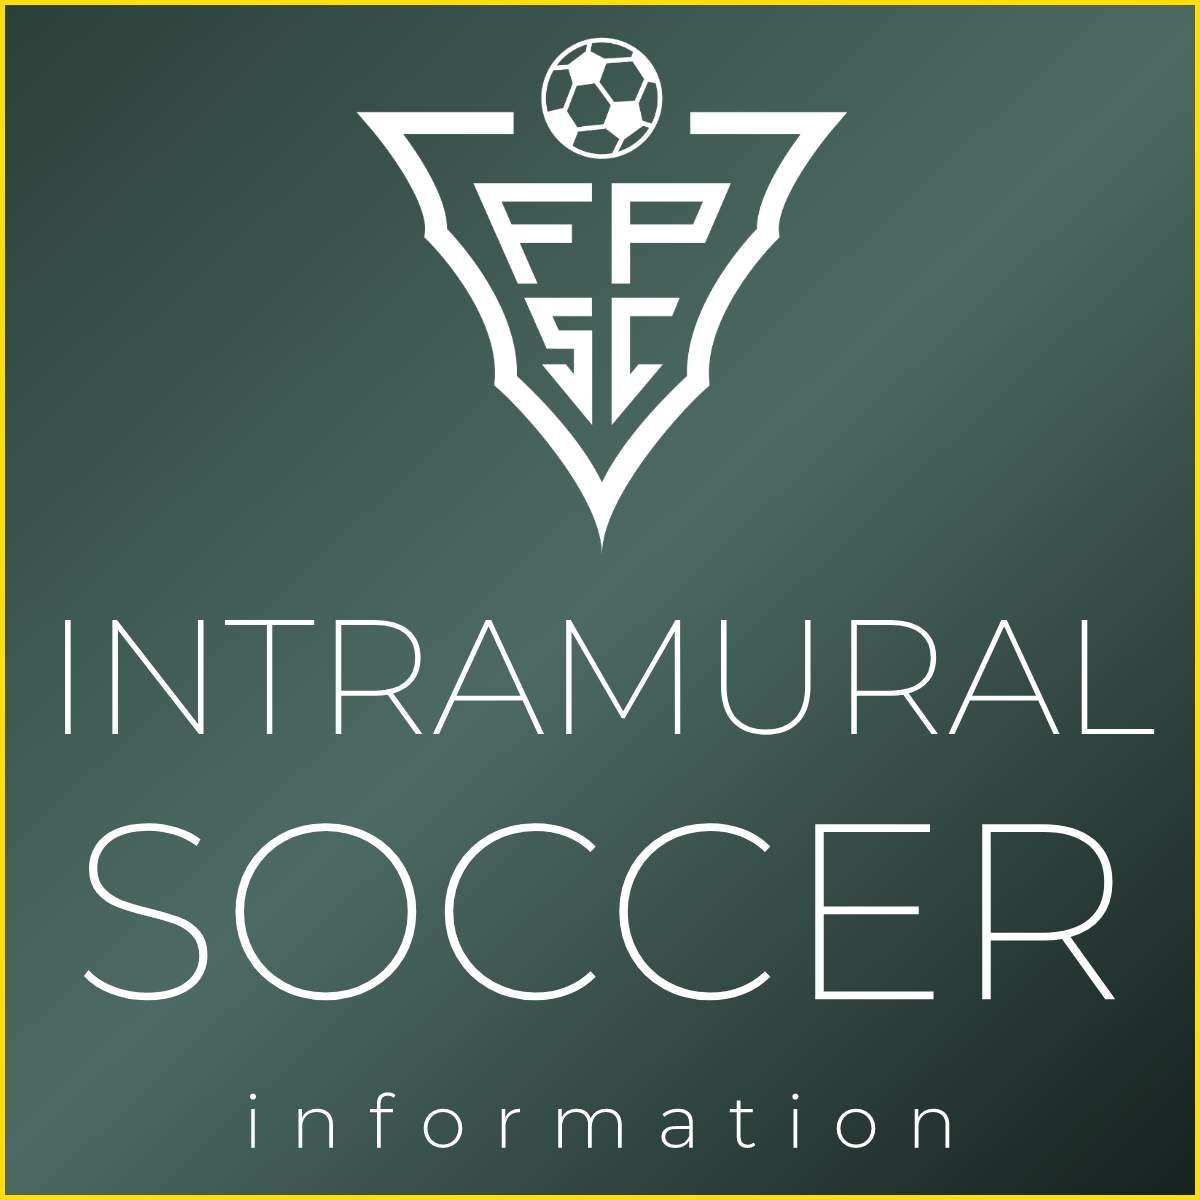 Click for Intramural Soccer Information